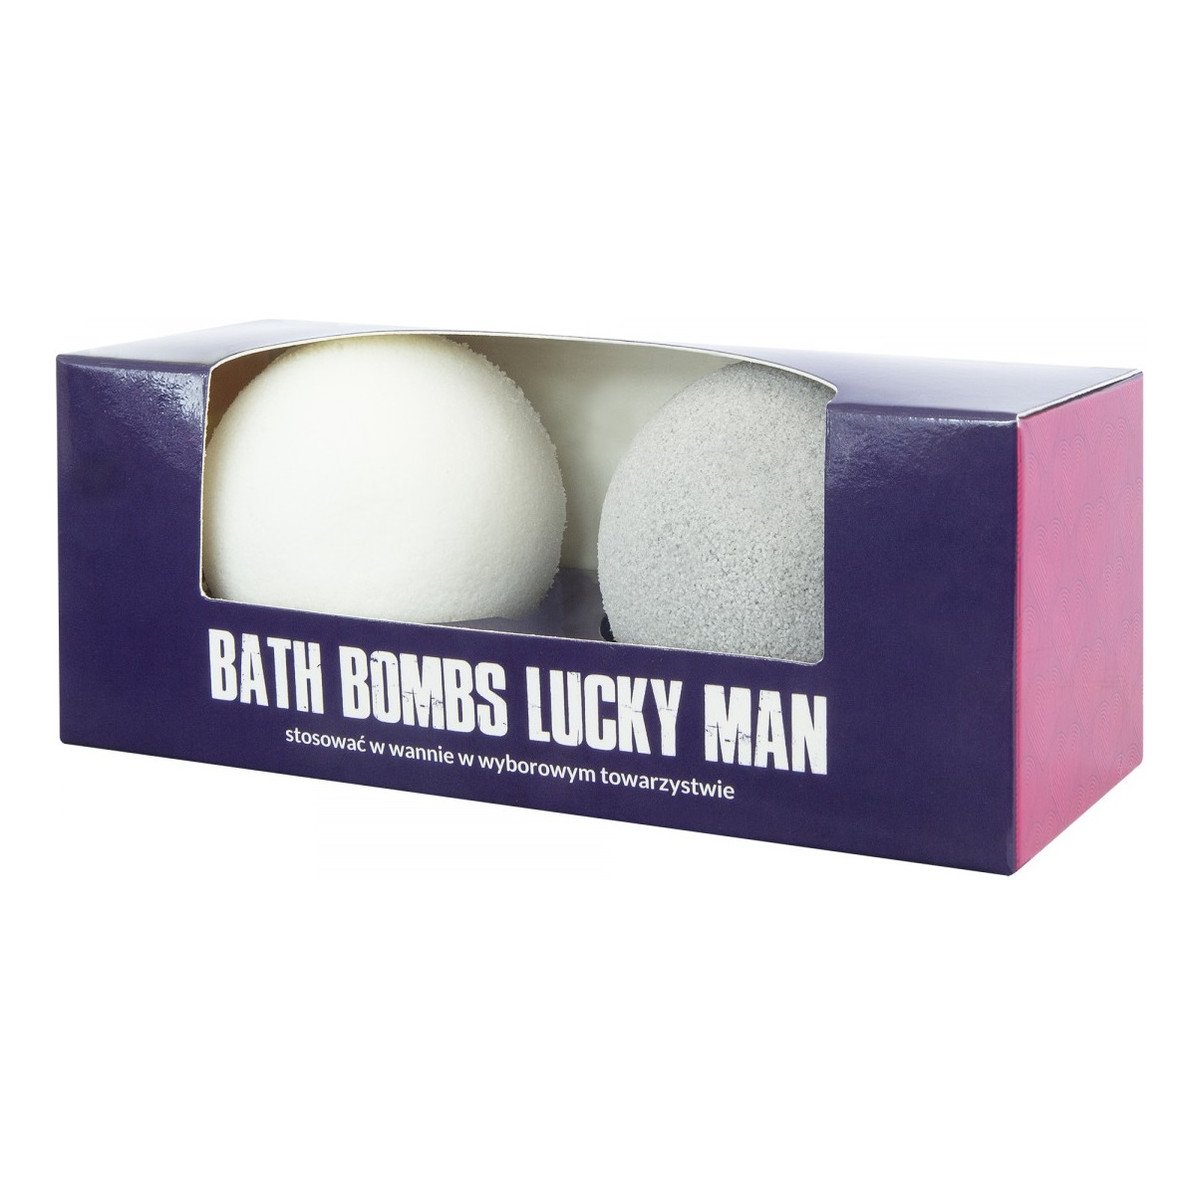 Laq Bath Bombs Lucky Man kule do kąpieli Doberman i Kozioł 120g